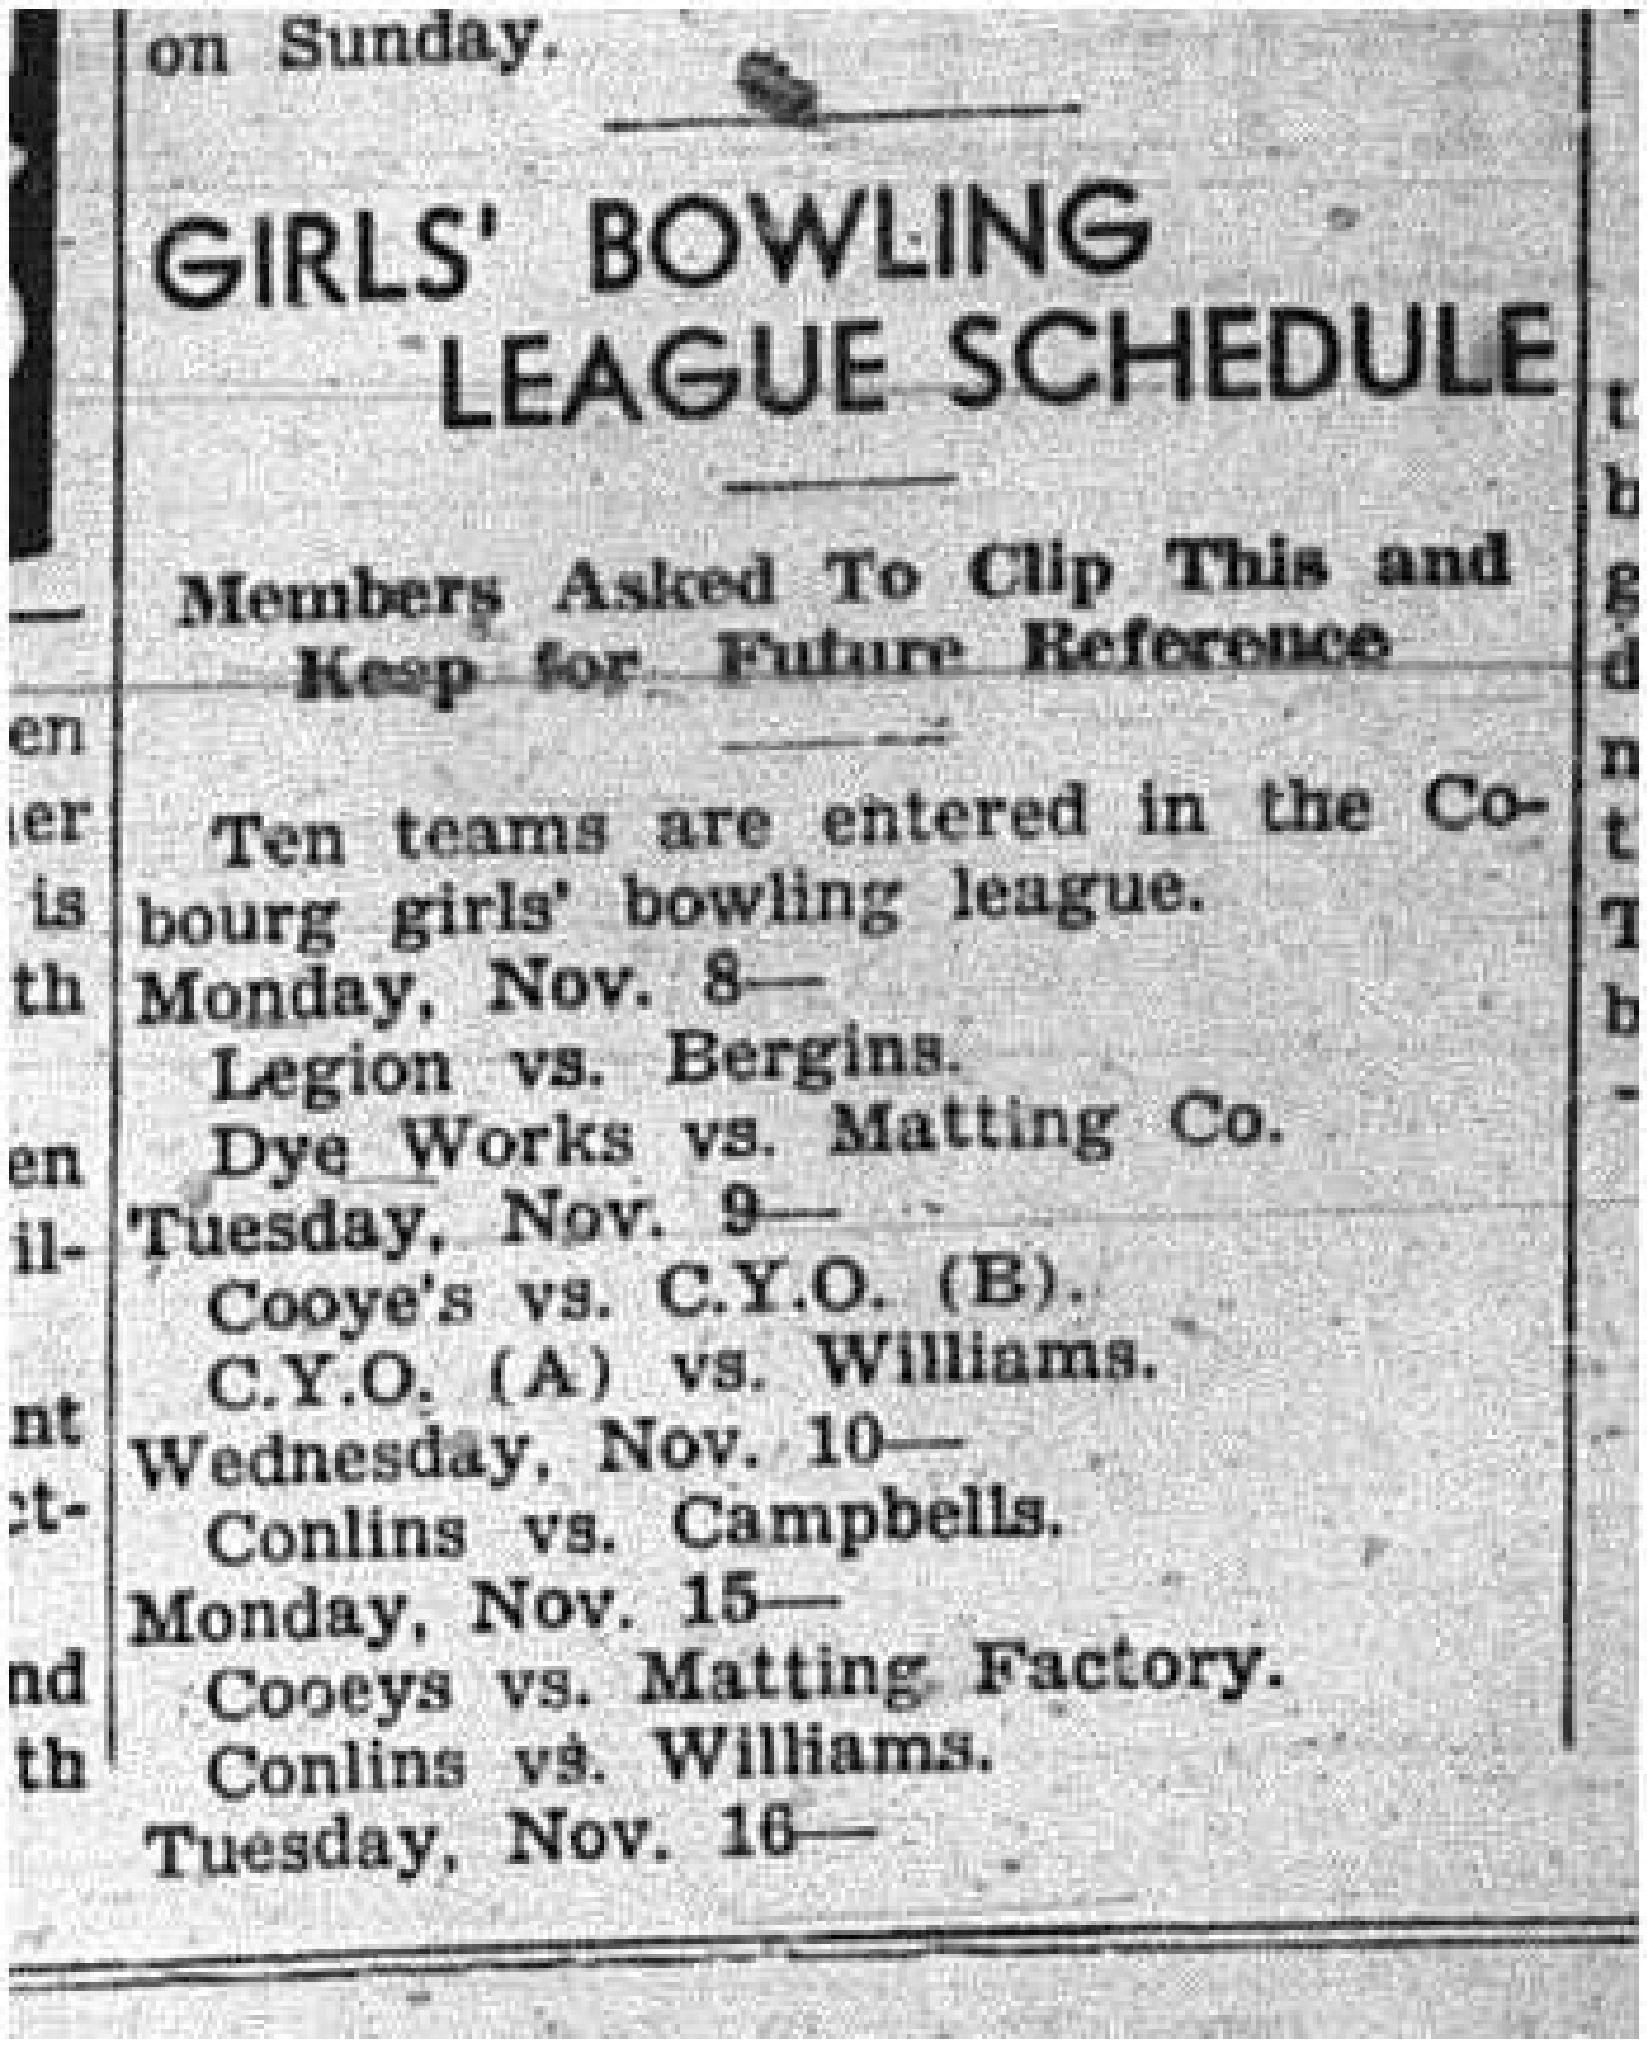 1943-11-04 Bowling - Ladies